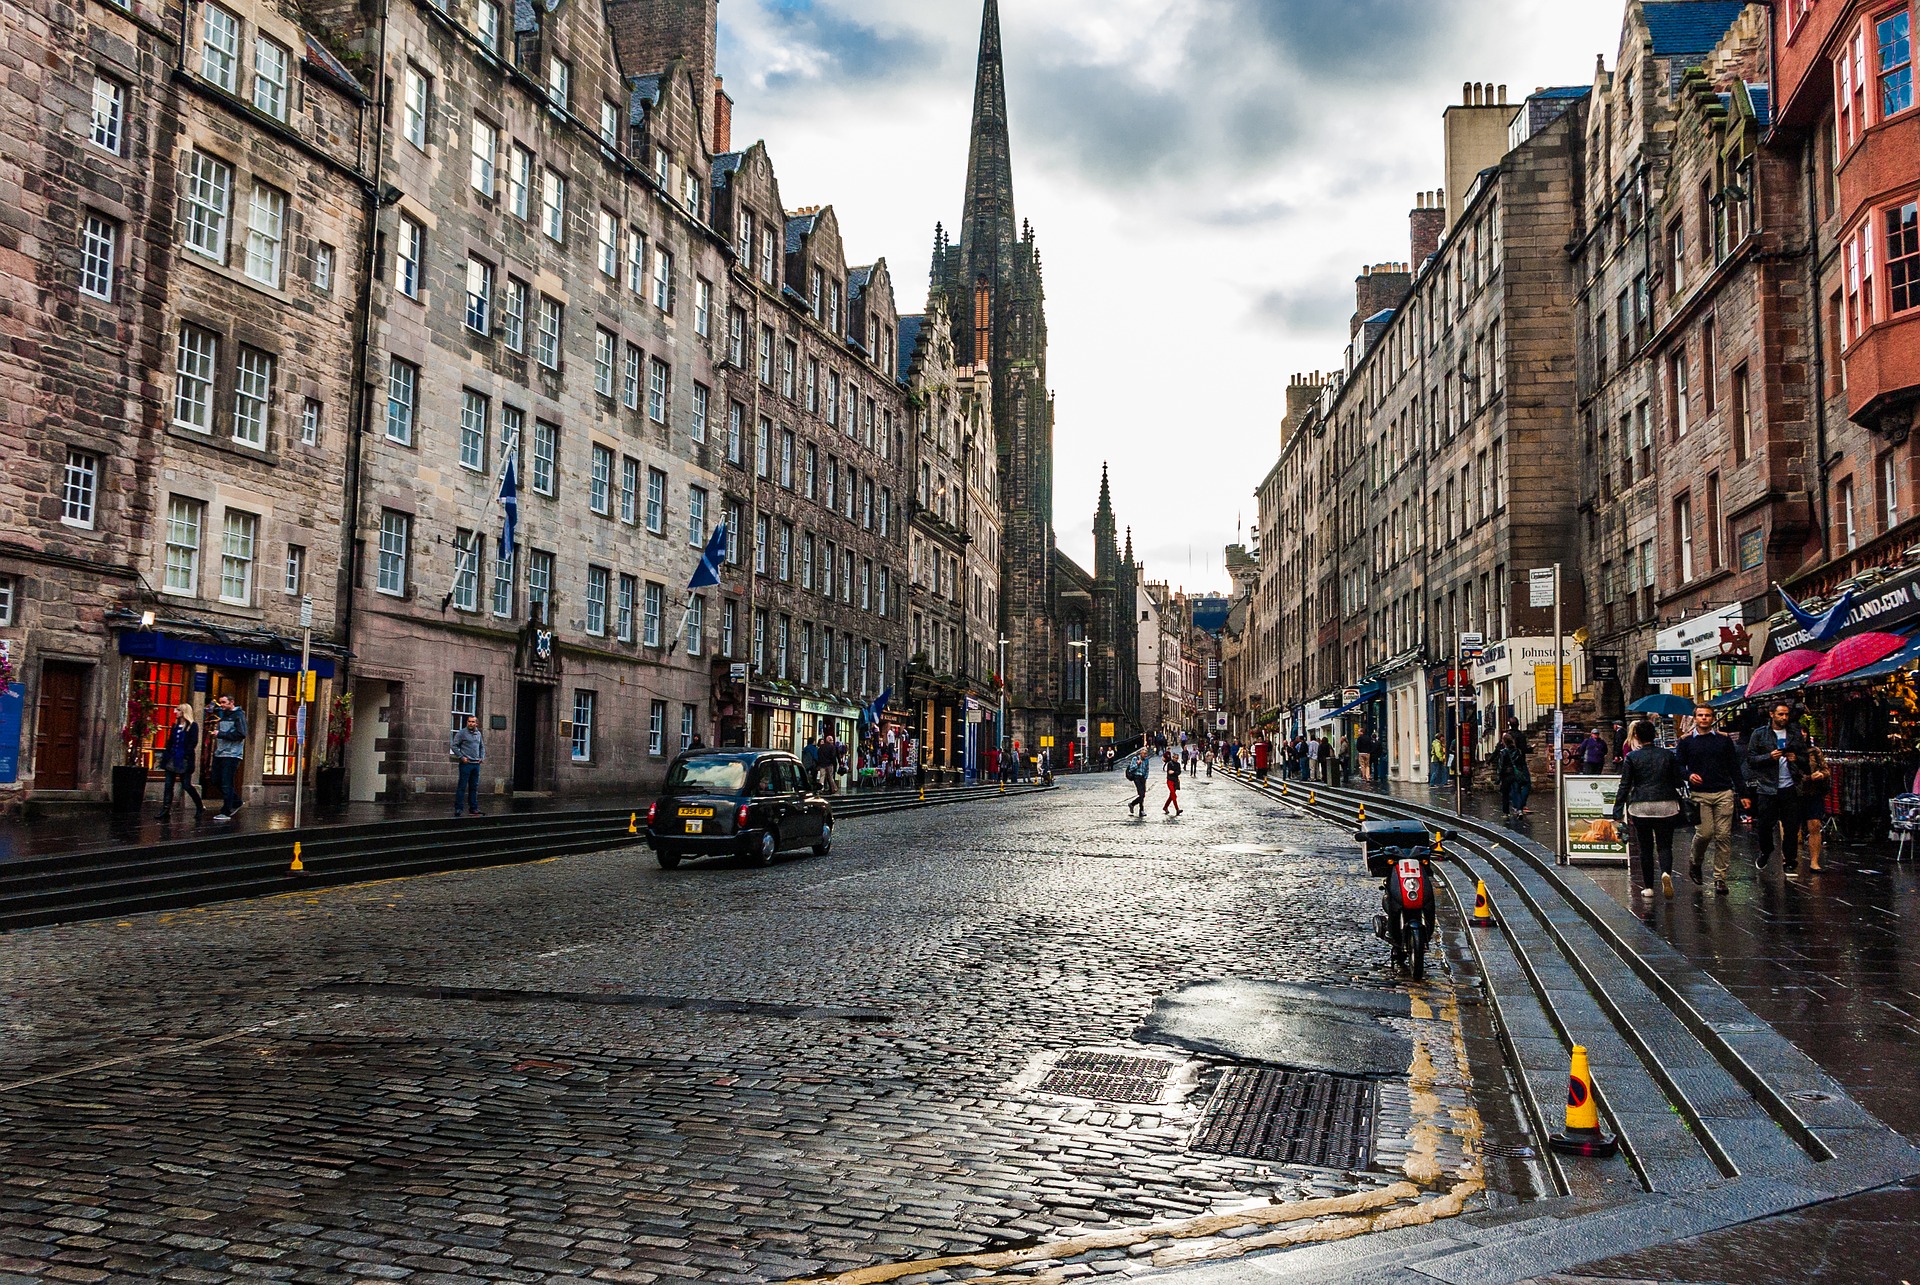 Edinburgh Streets | Walking Tours in Edinburgh with UWS | University of the West of Scotland